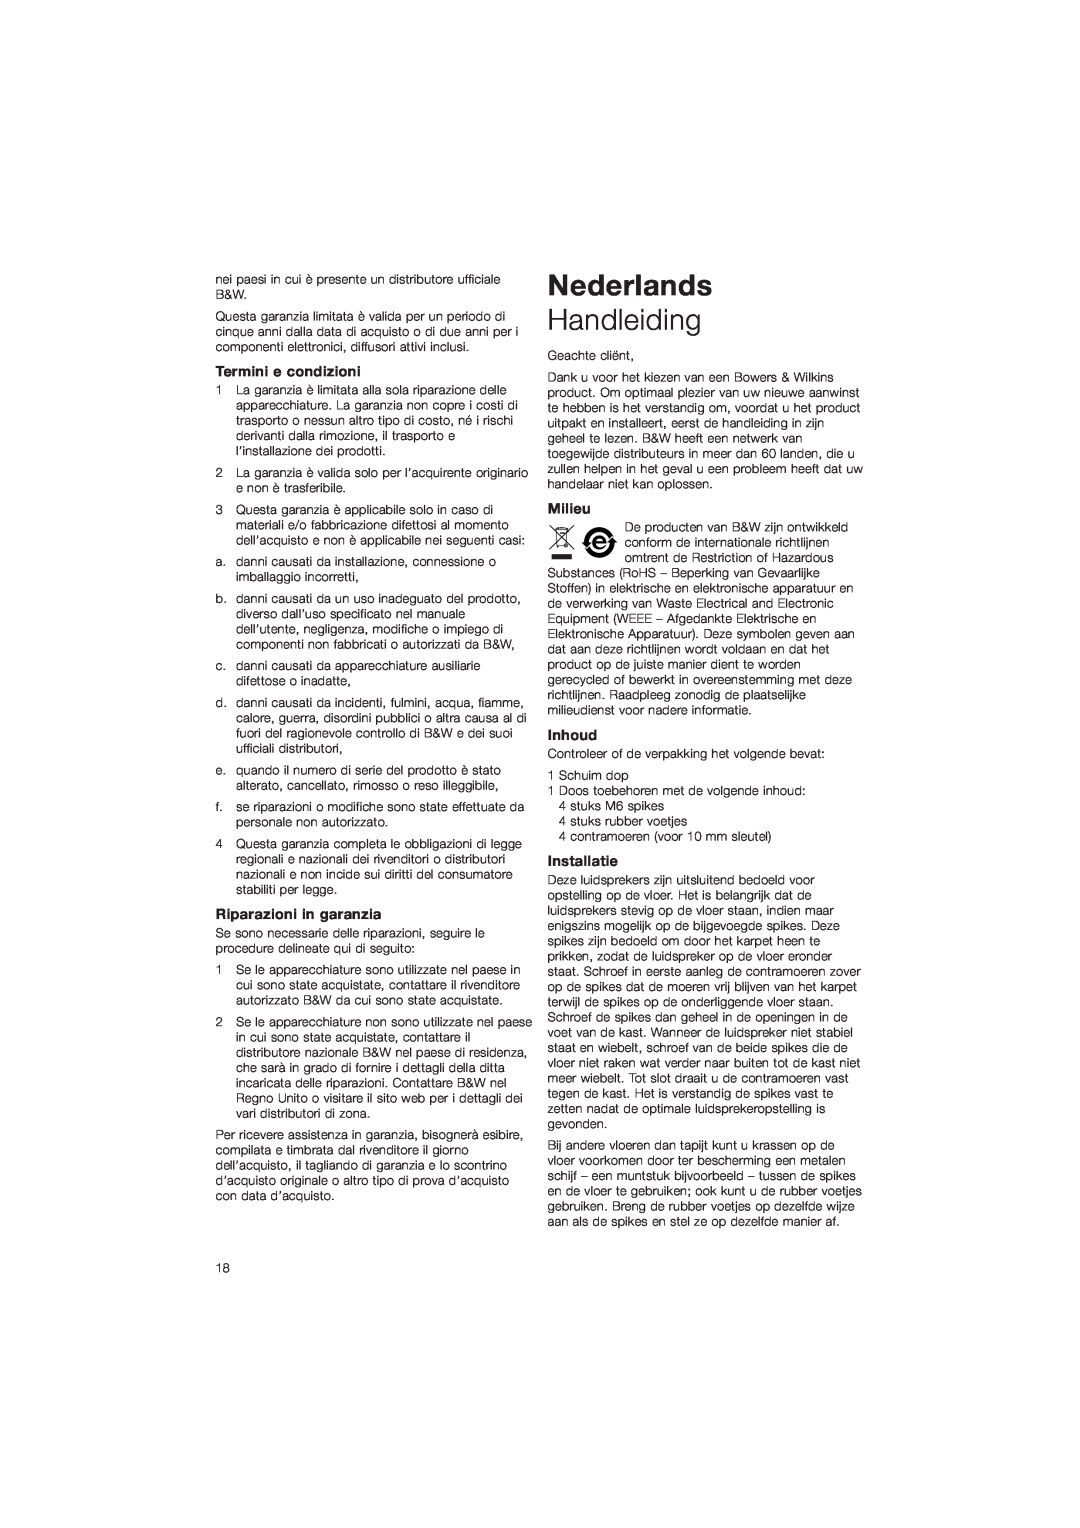 Bowers & Wilkins CM9 Nederlands, Handleiding, Termini e condizioni, Riparazioni in garanzia, Milieu, Inhoud, Installatie 